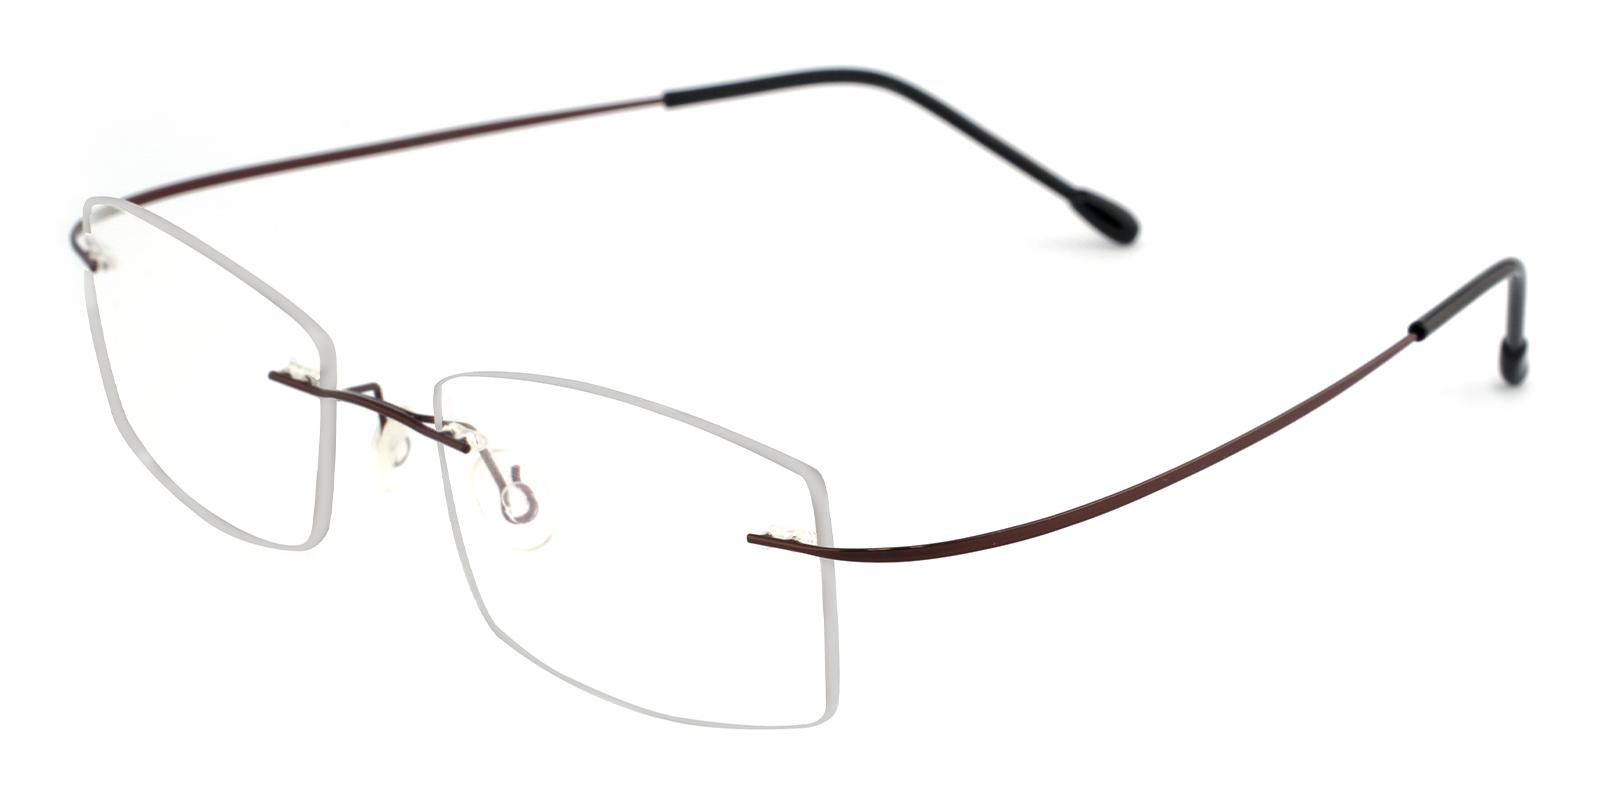 Pluto Brown Metal , Memory Eyeglasses , NosePads Frames from ABBE Glasses